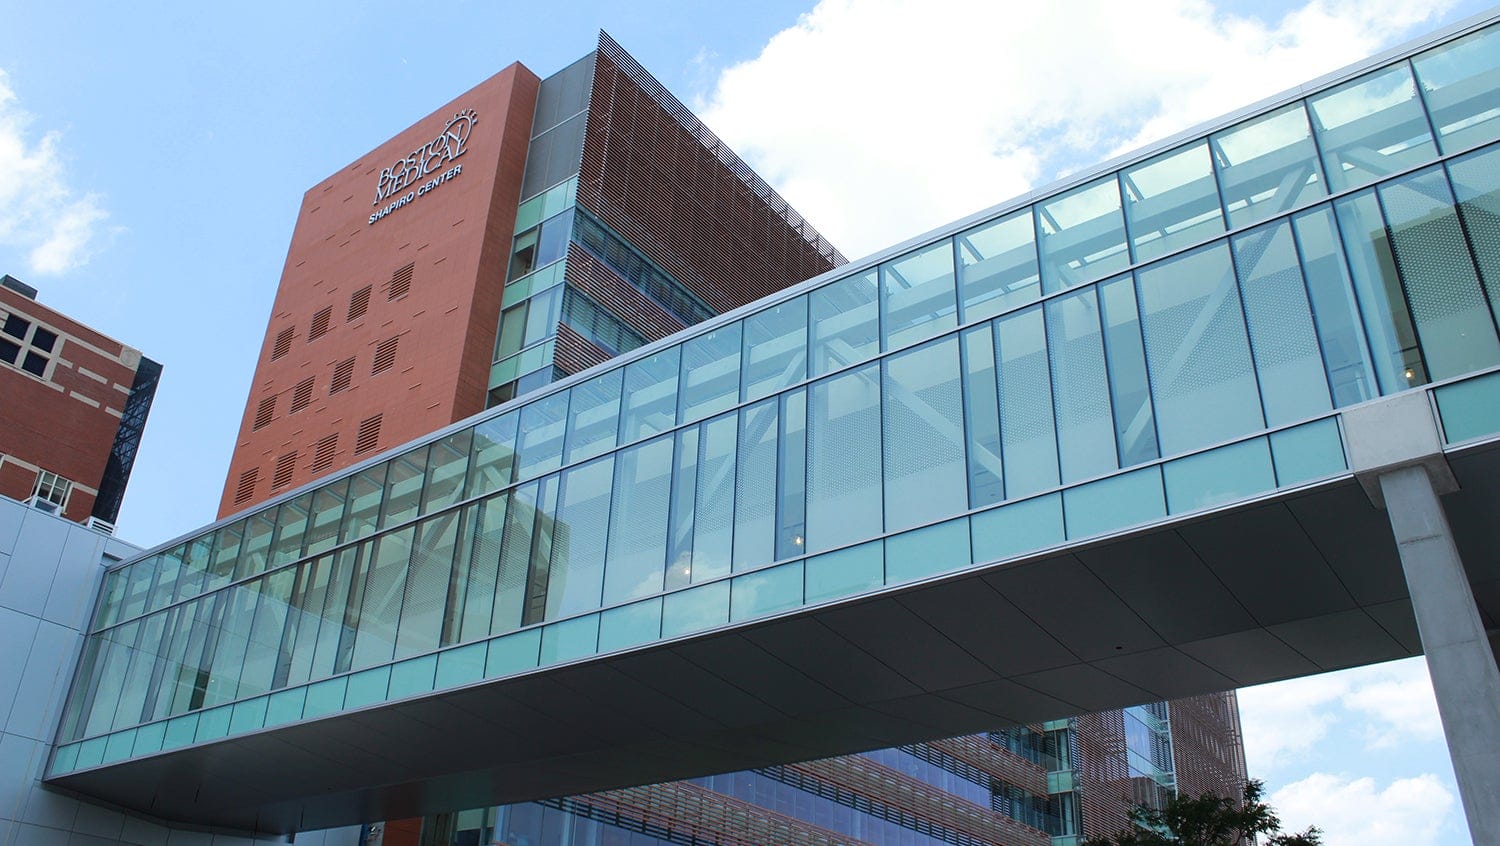 External view of Boston Medical Center